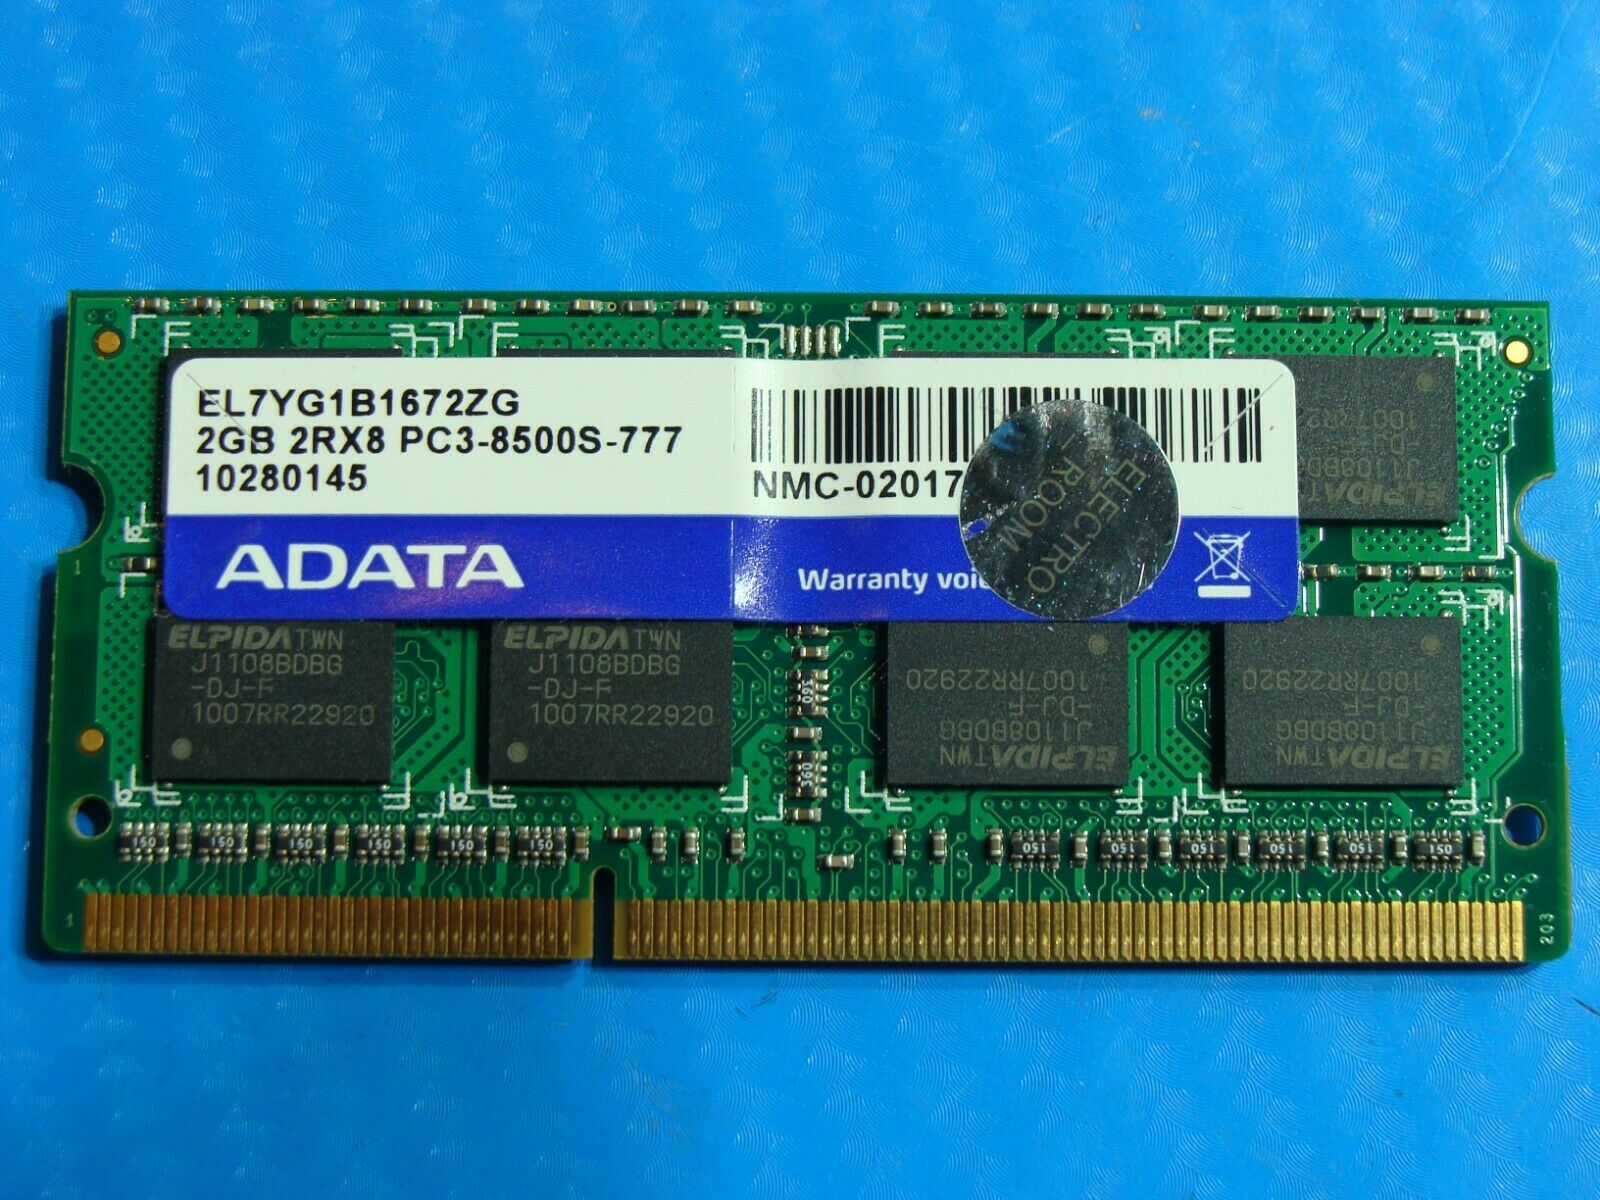 Sony PCG-71312L ADATA 2GB 2Rx8 PC3-8500S SO-DIMM Memory RAM EL7YG1B1672ZG - Laptop Parts - Buy Authentic Computer Parts - Top Seller Ebay